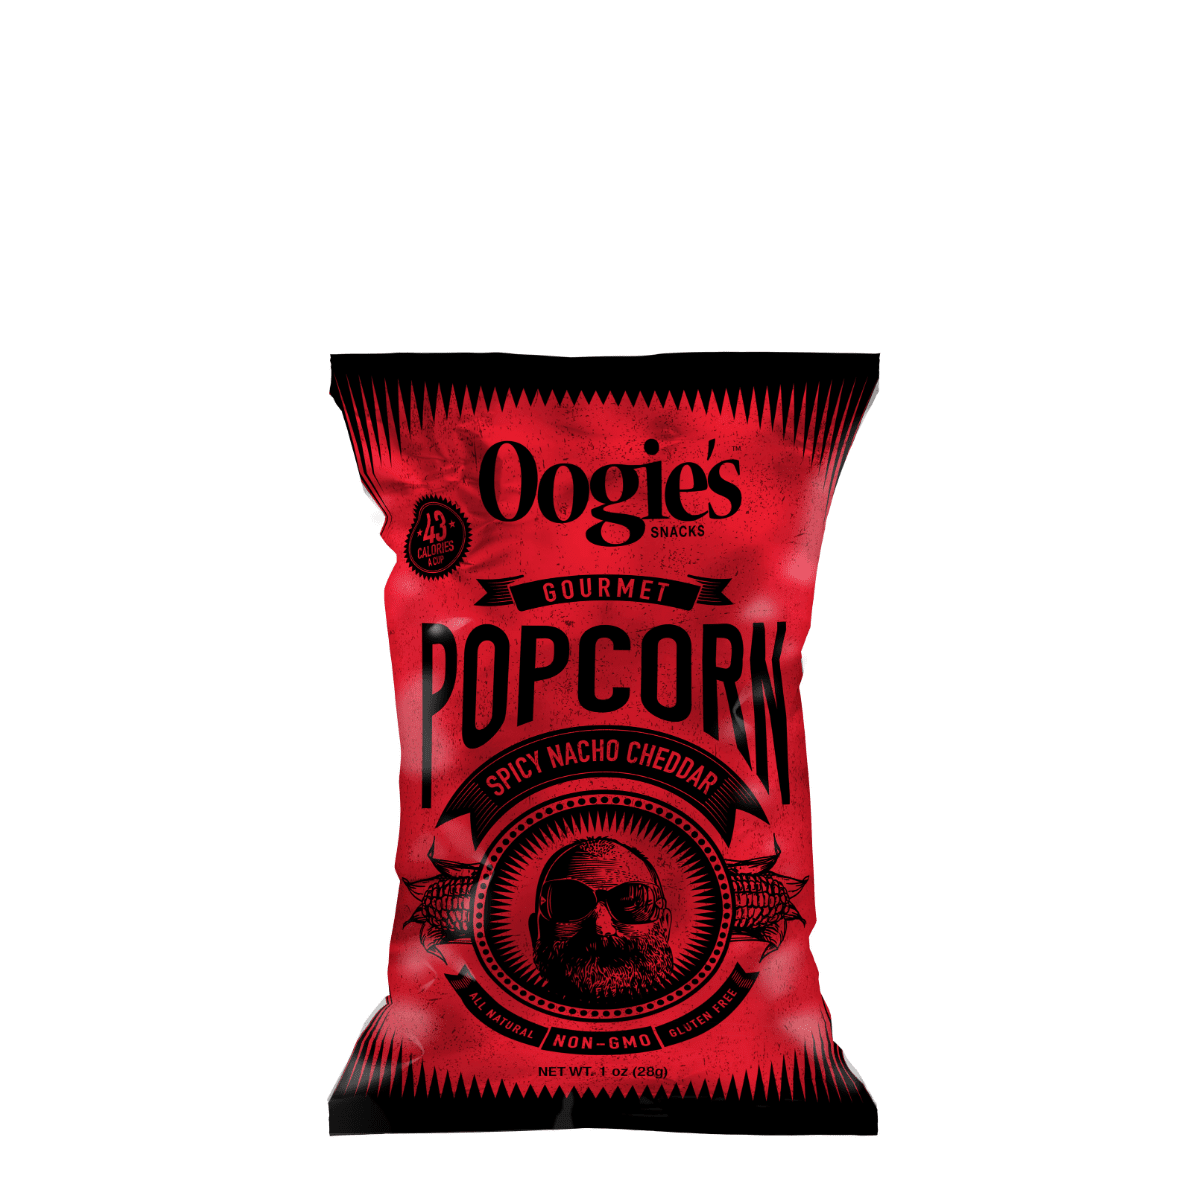 Spicy nacho cheddar snack size popcorn bag